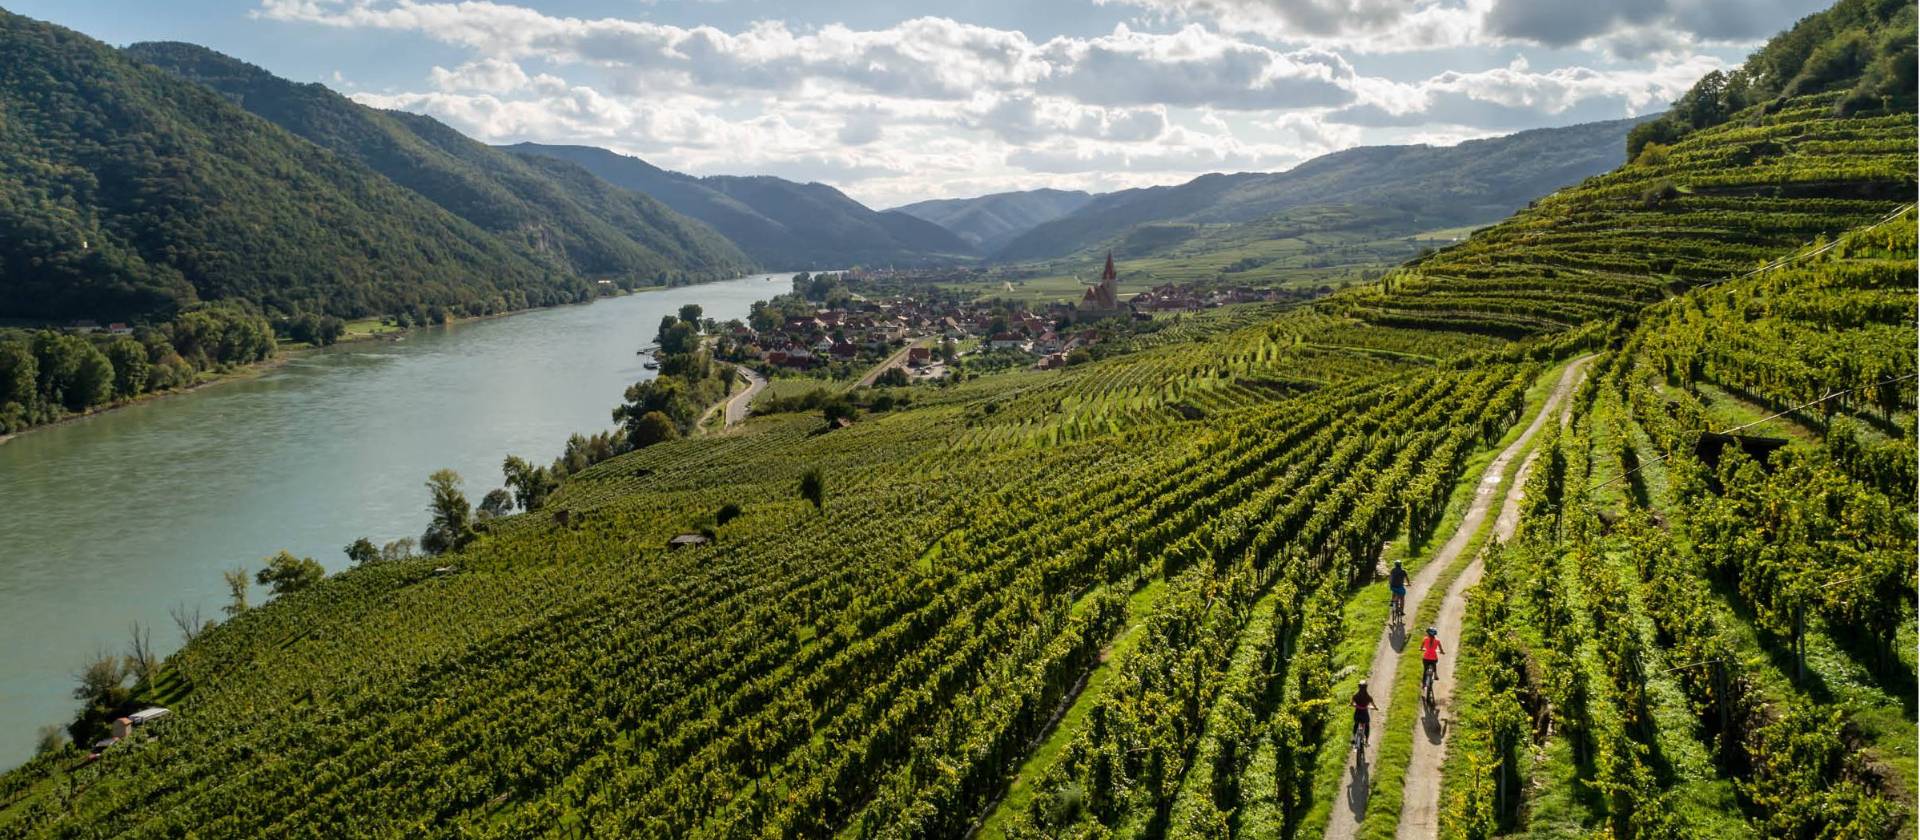 Cycling vineyards trails alongside the Drau river in Austria | Martin Steinthaler